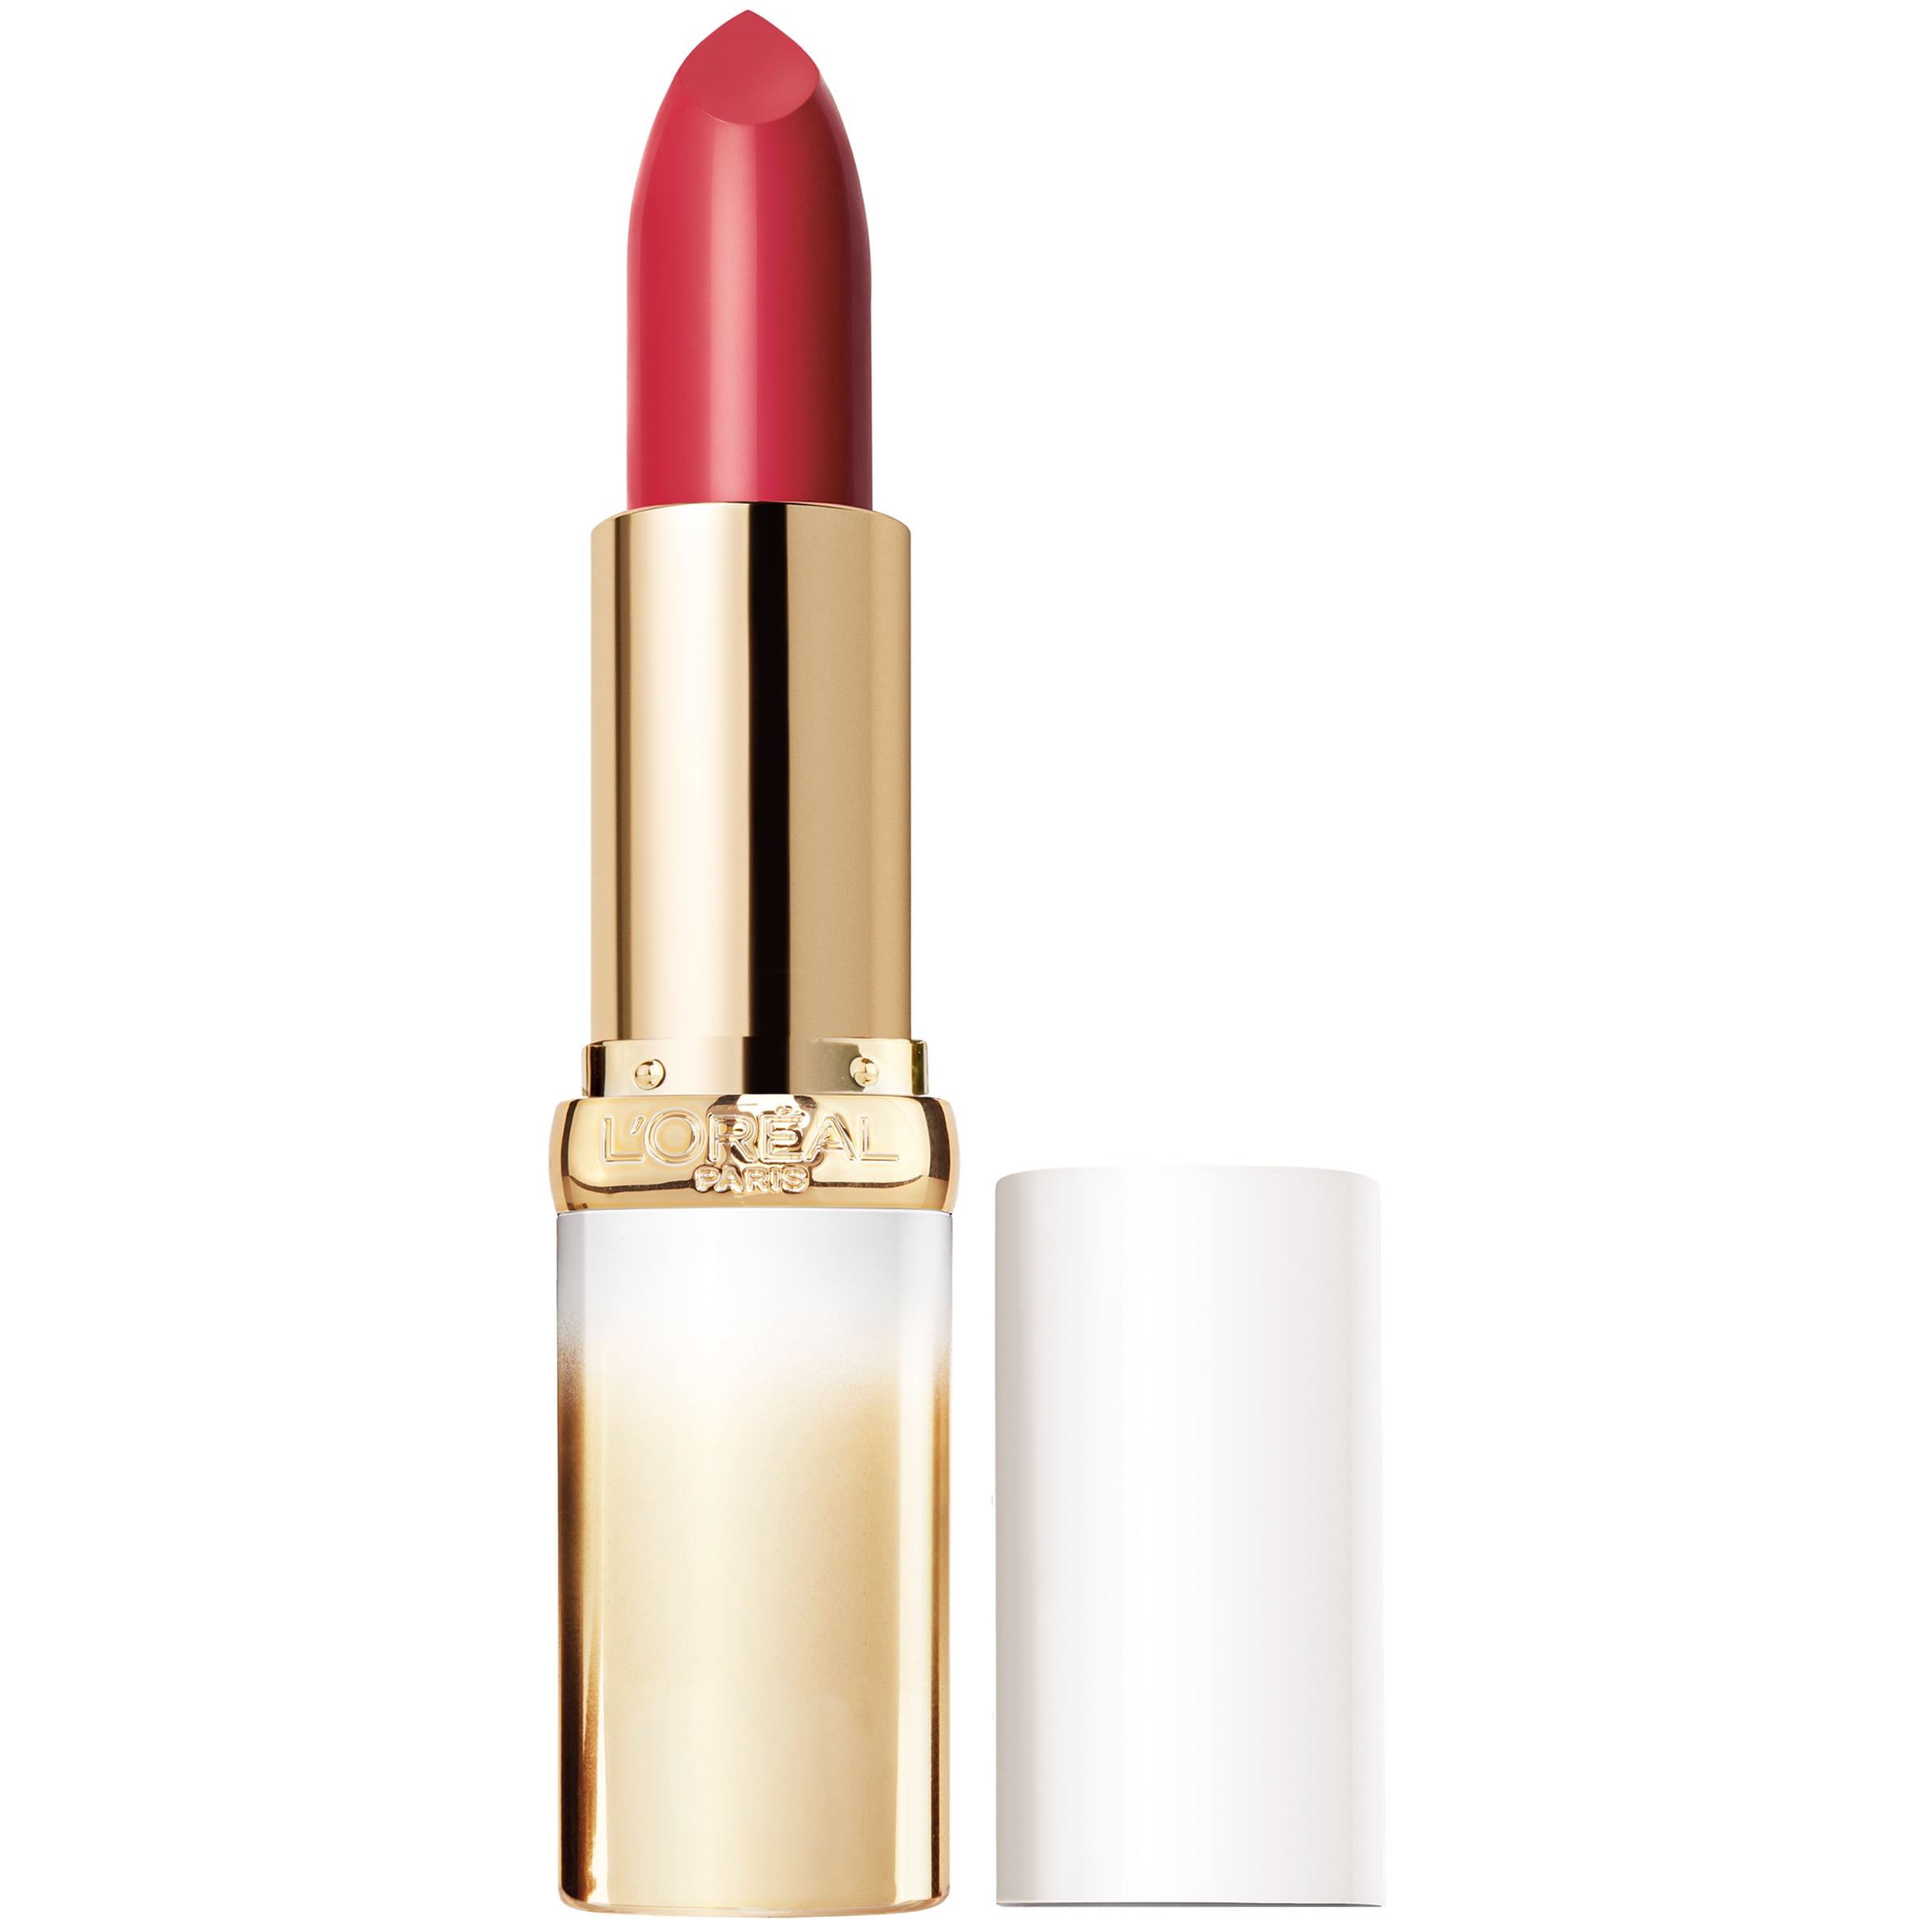 L'Oreal Paris Age Perfect Satin Lipstick with Precious ...